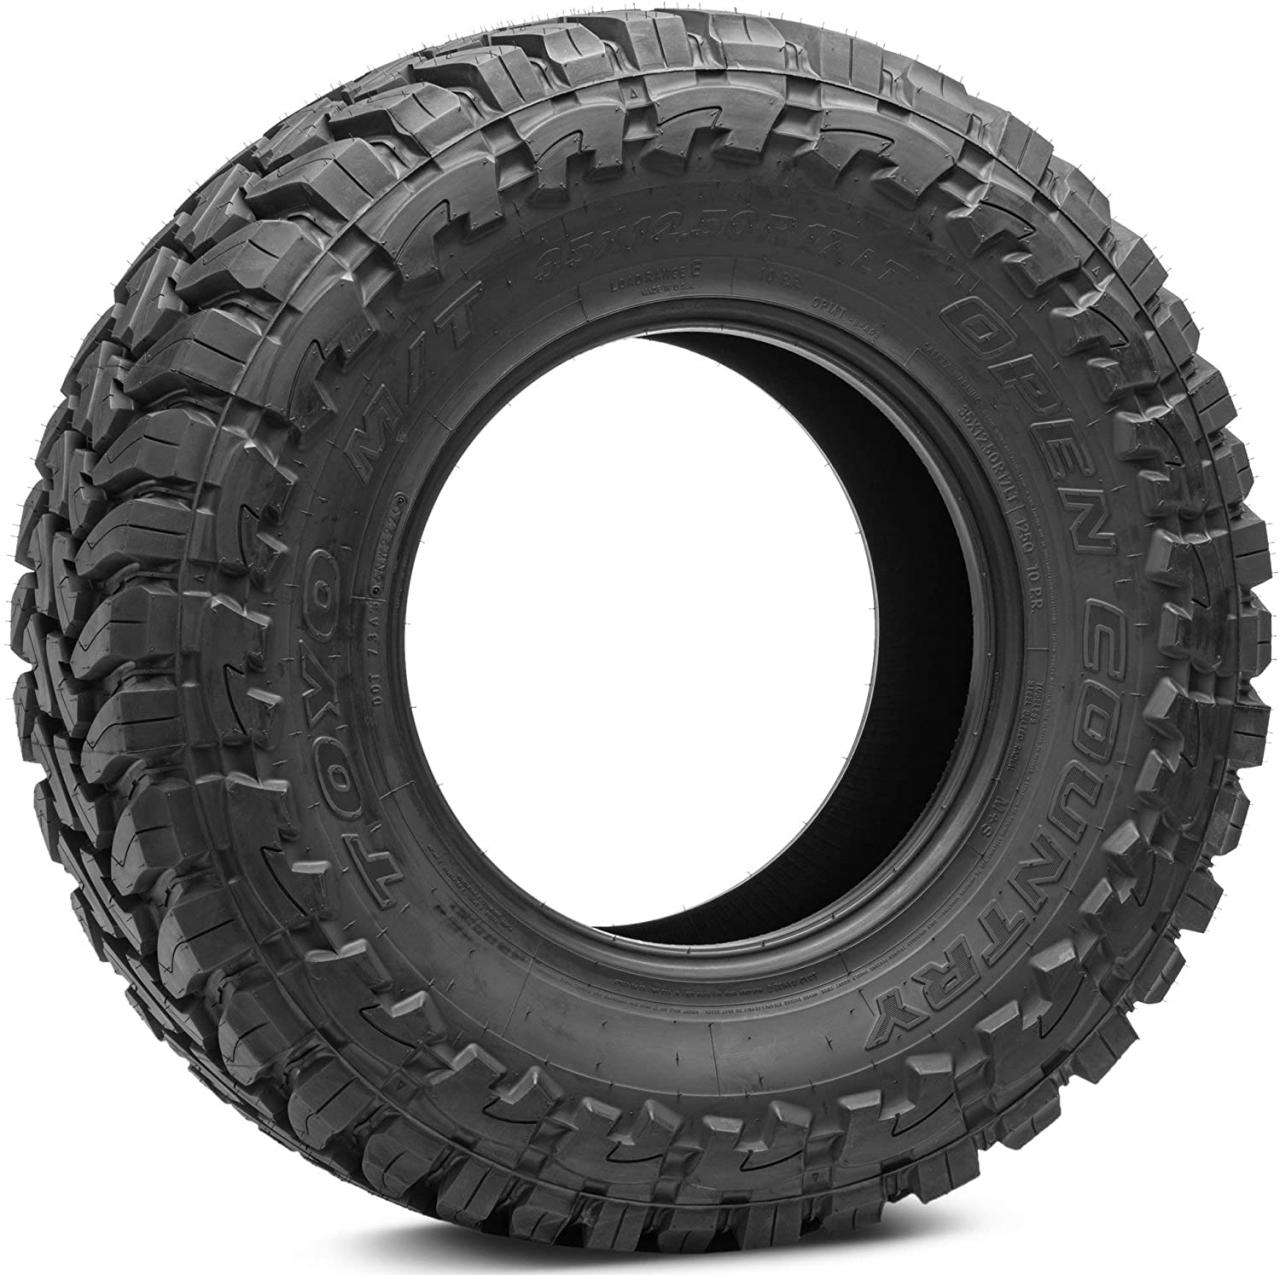 Buy Toyo Tire Open Country M/T Mud-Terrain Tire - 295/70R17LT 128P Online  in Hong Kong. B00565Y2E4